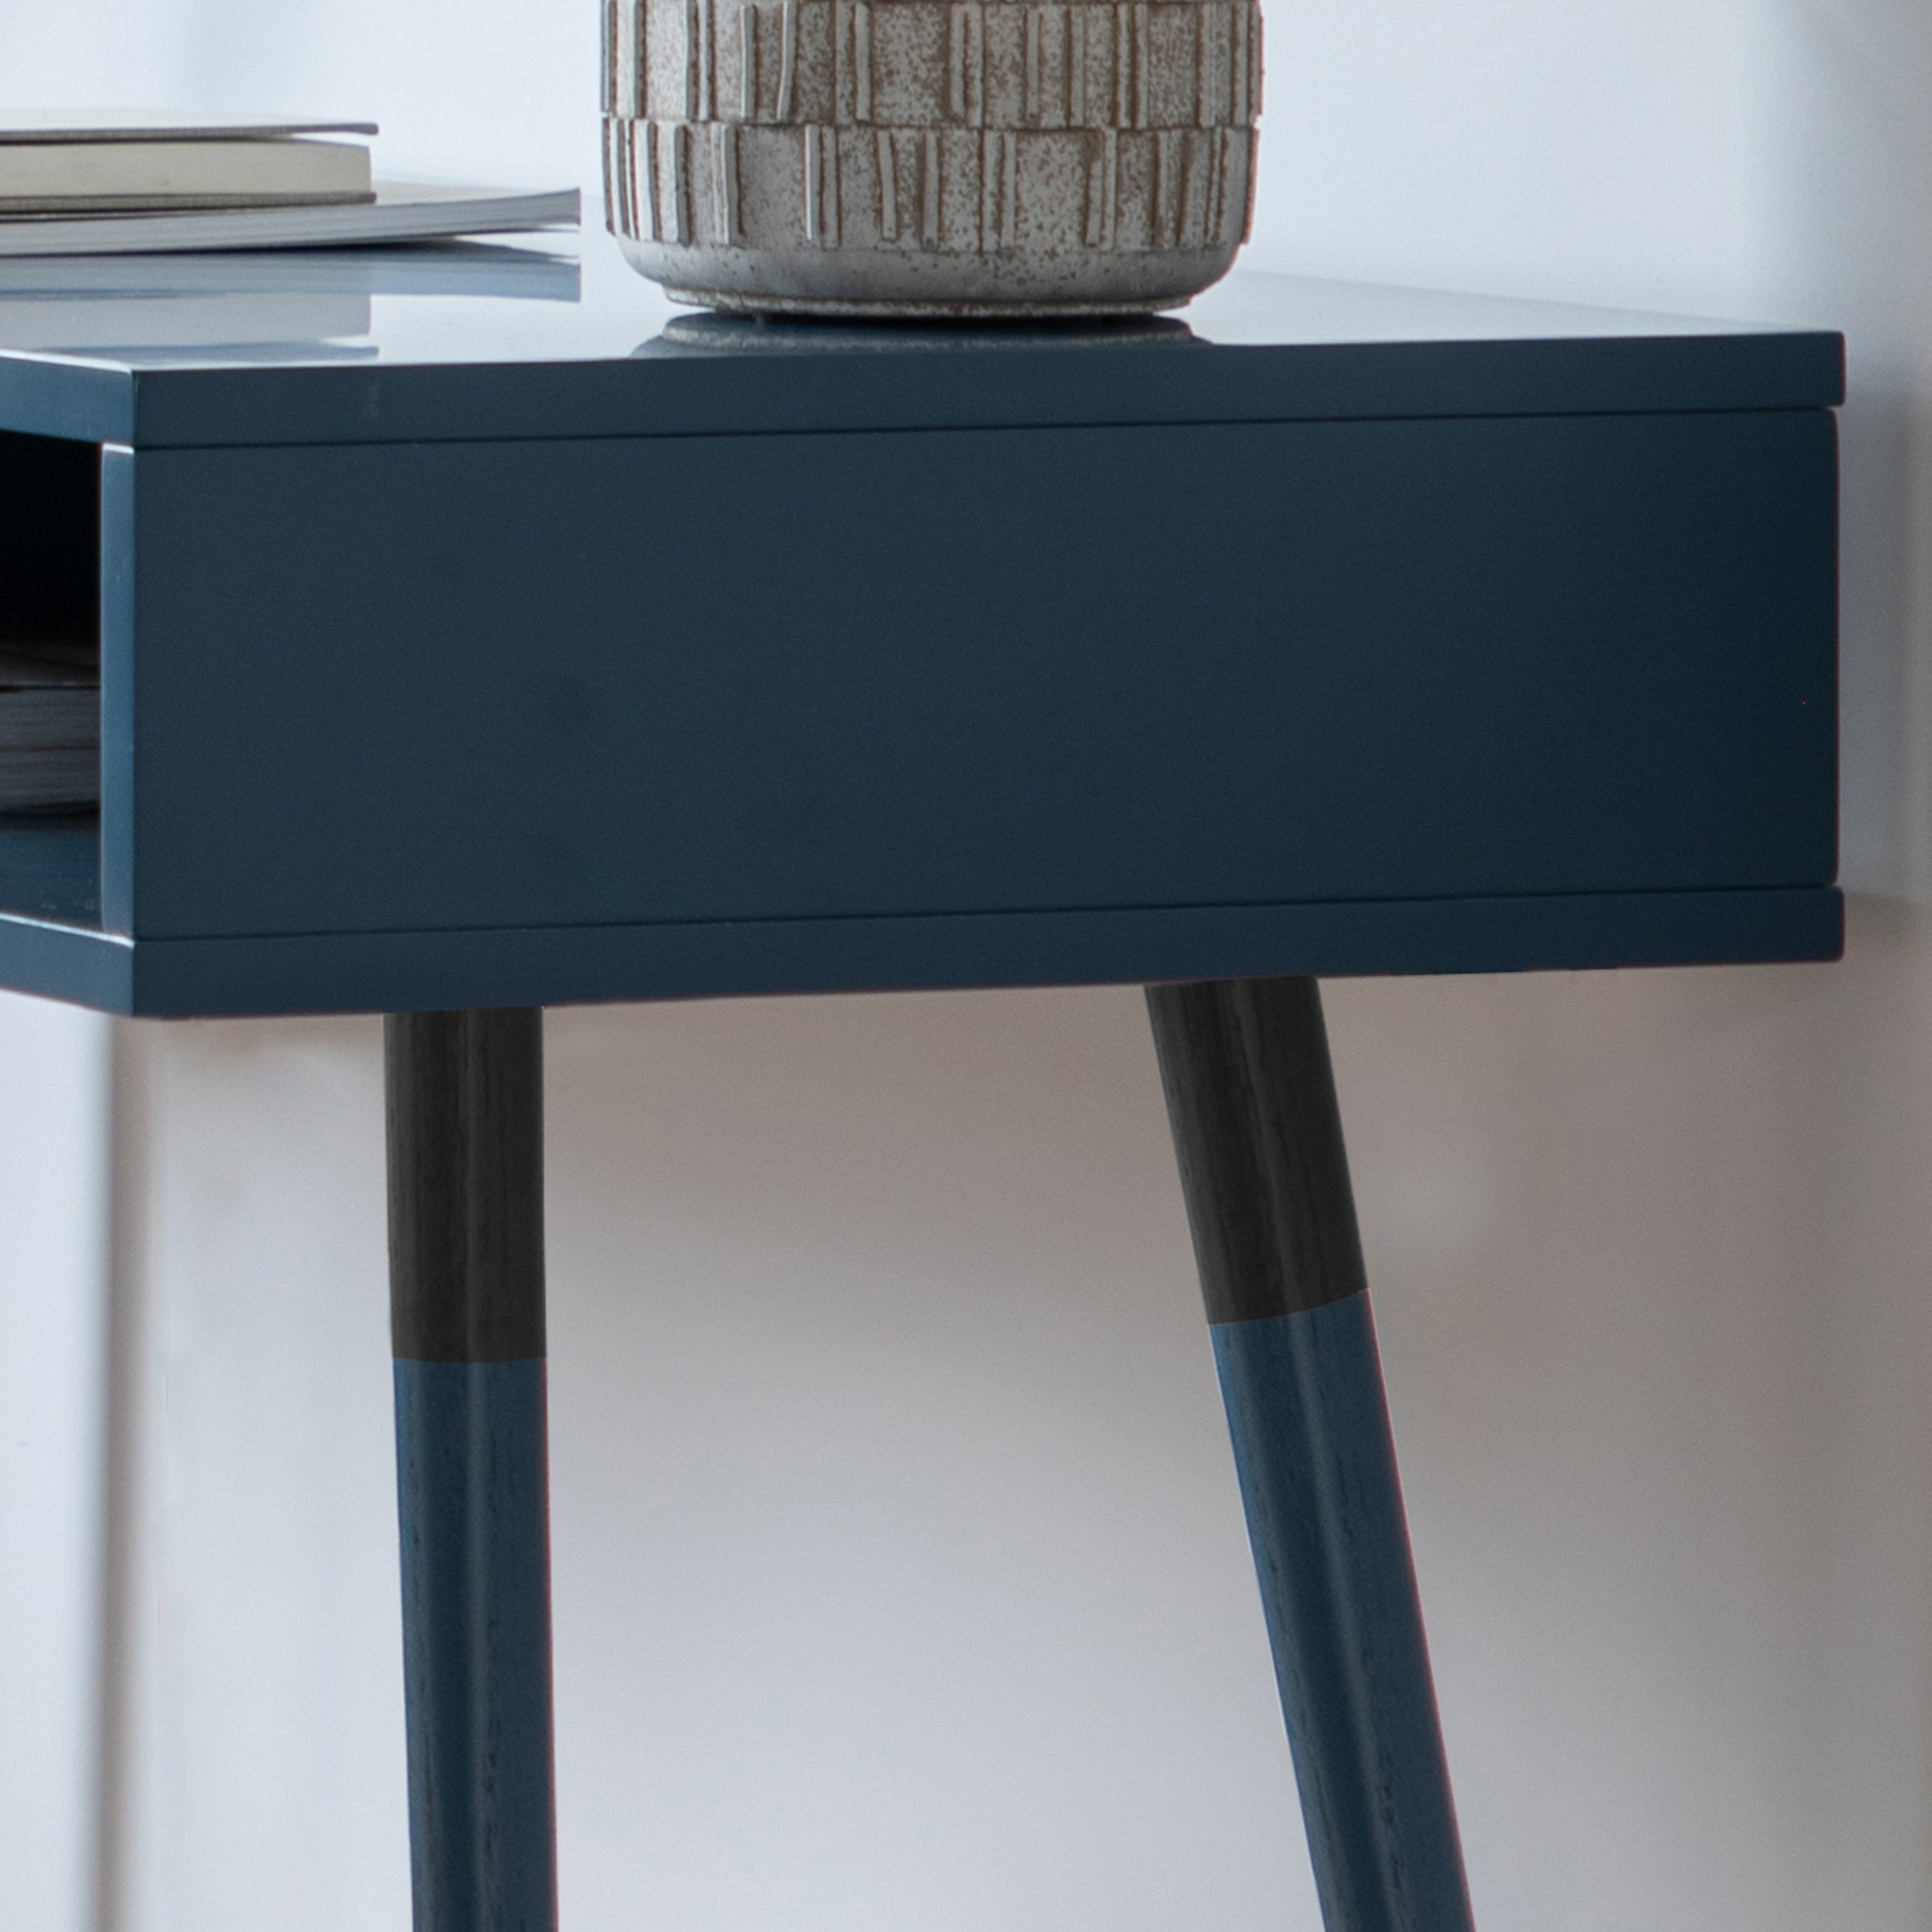 Evissa blue console desk with brass socks and adjustable feet | MalletandPlane.com